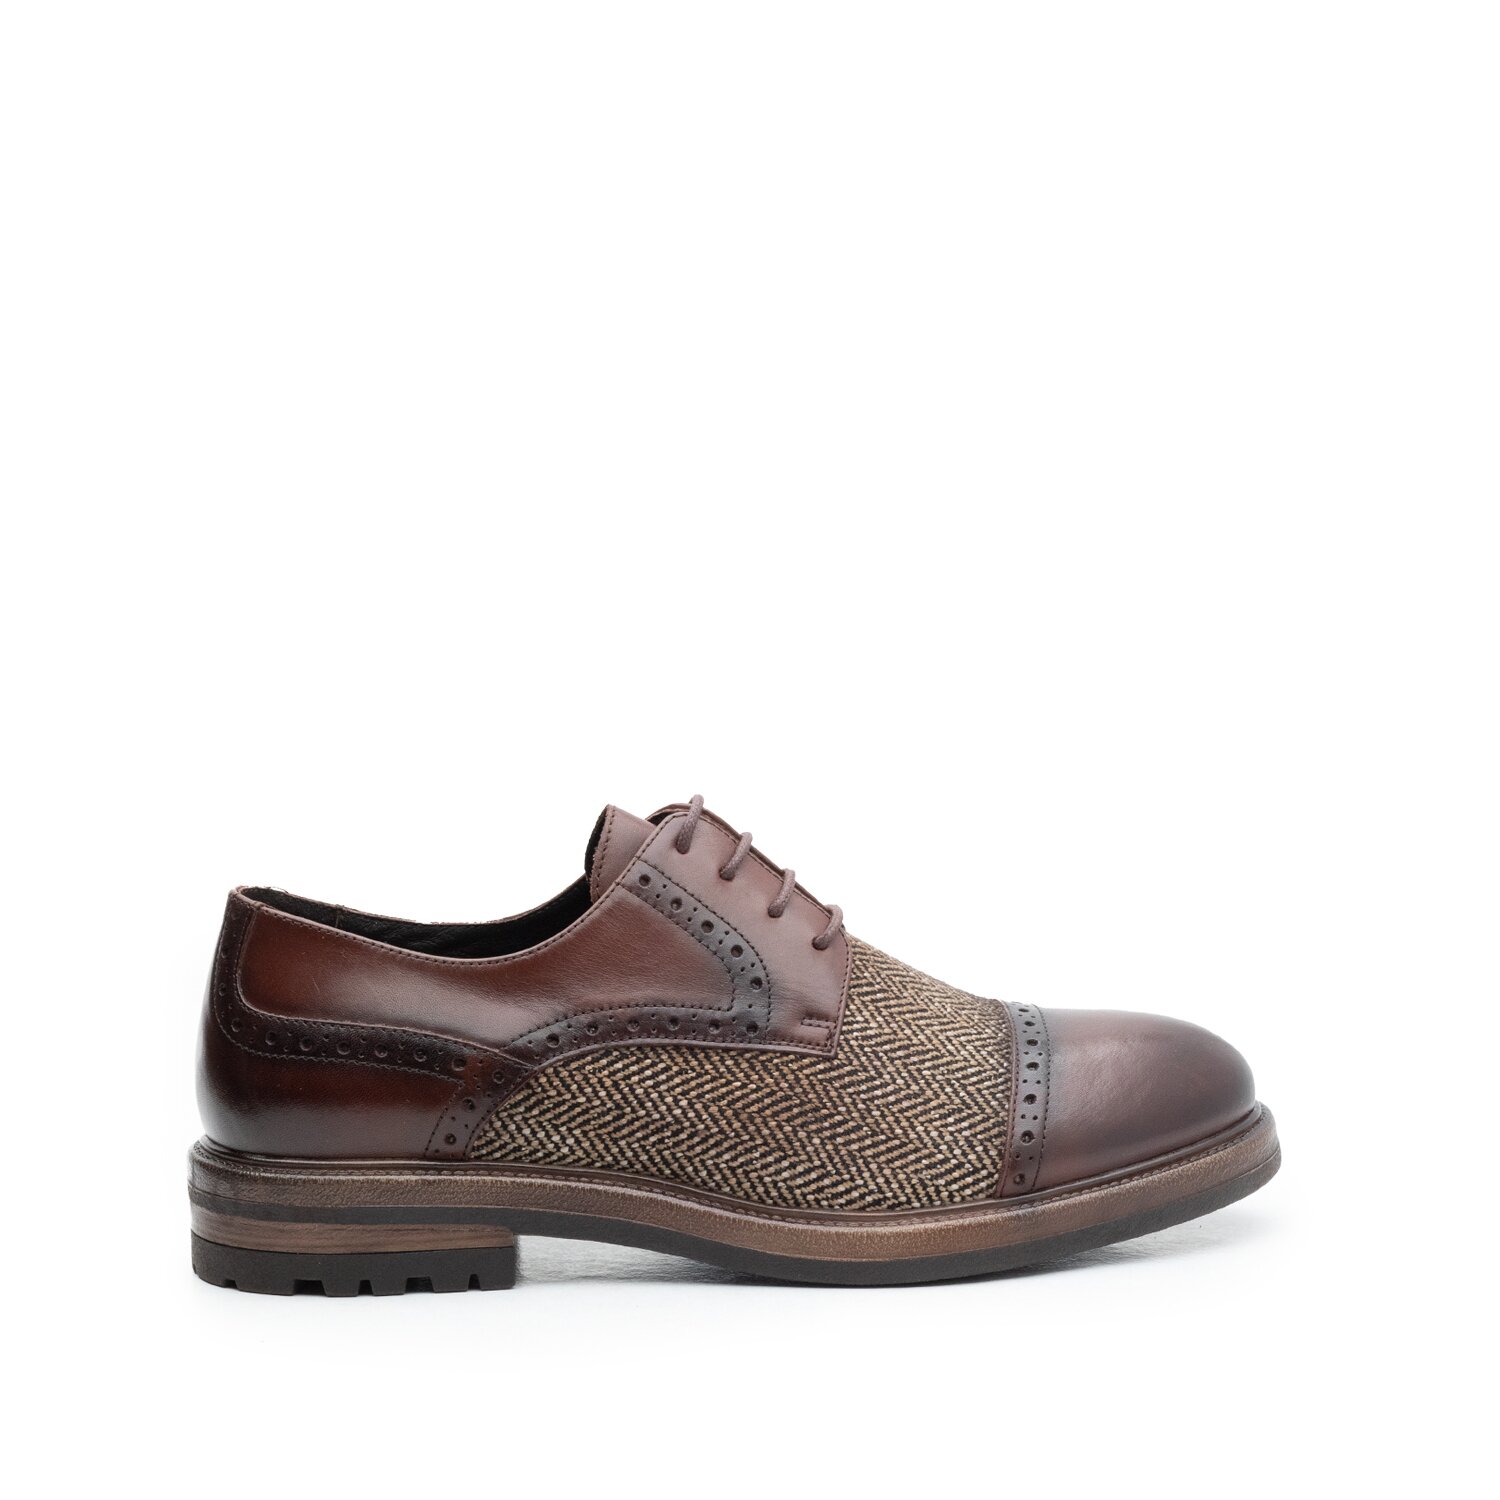 Pantofi barbati casual din piele naturala, Leofex - 634 mogano box sintetic